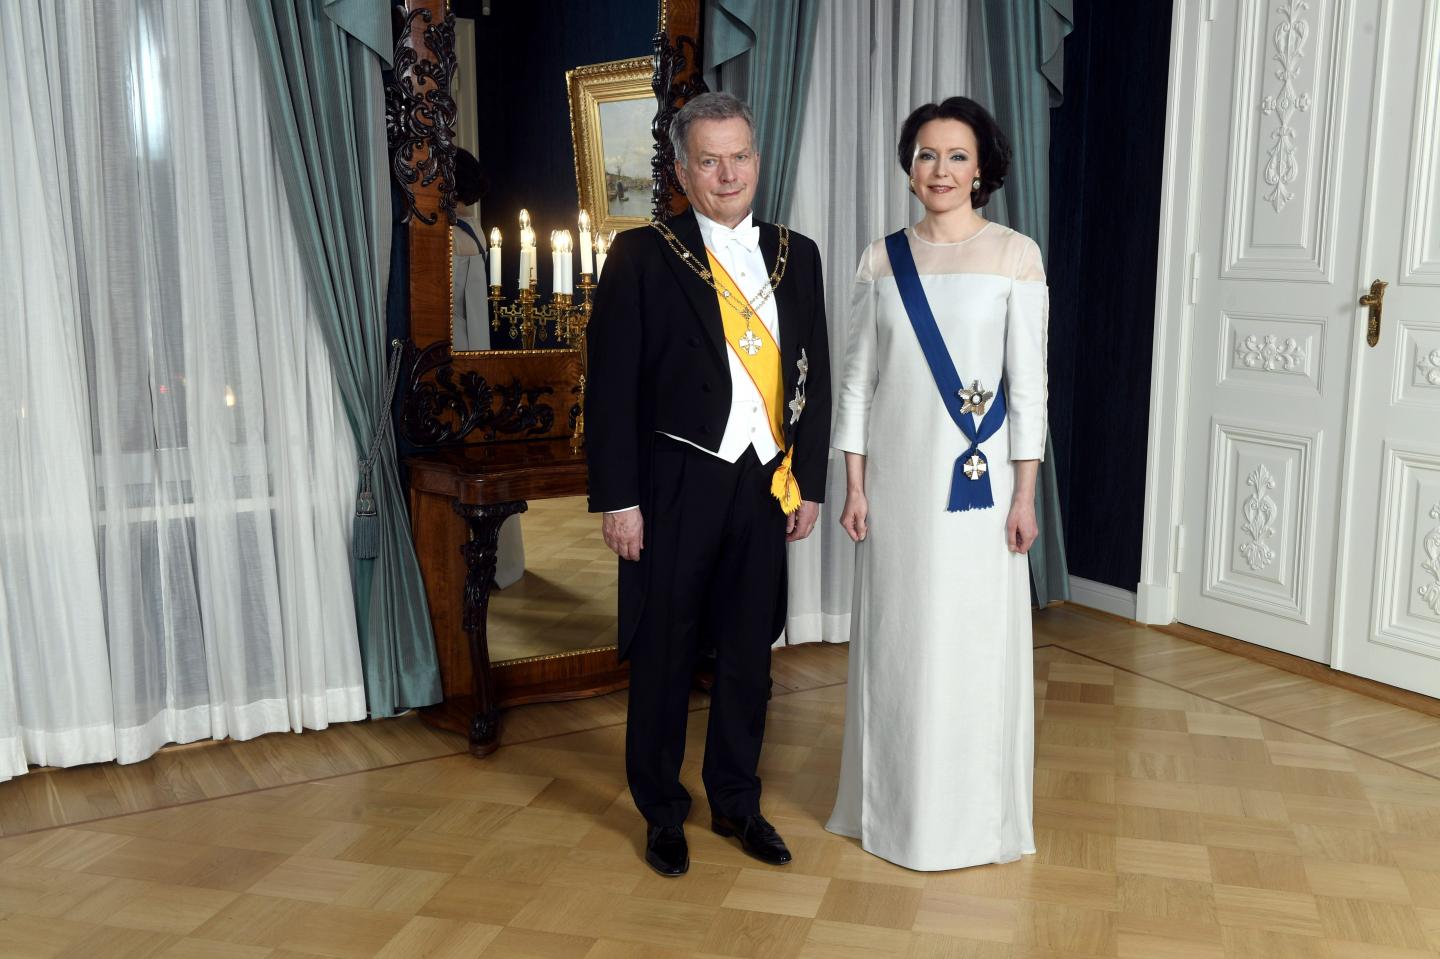 Haukio and Niinistö at Finnish Independence Day Reception on December 6, 2018